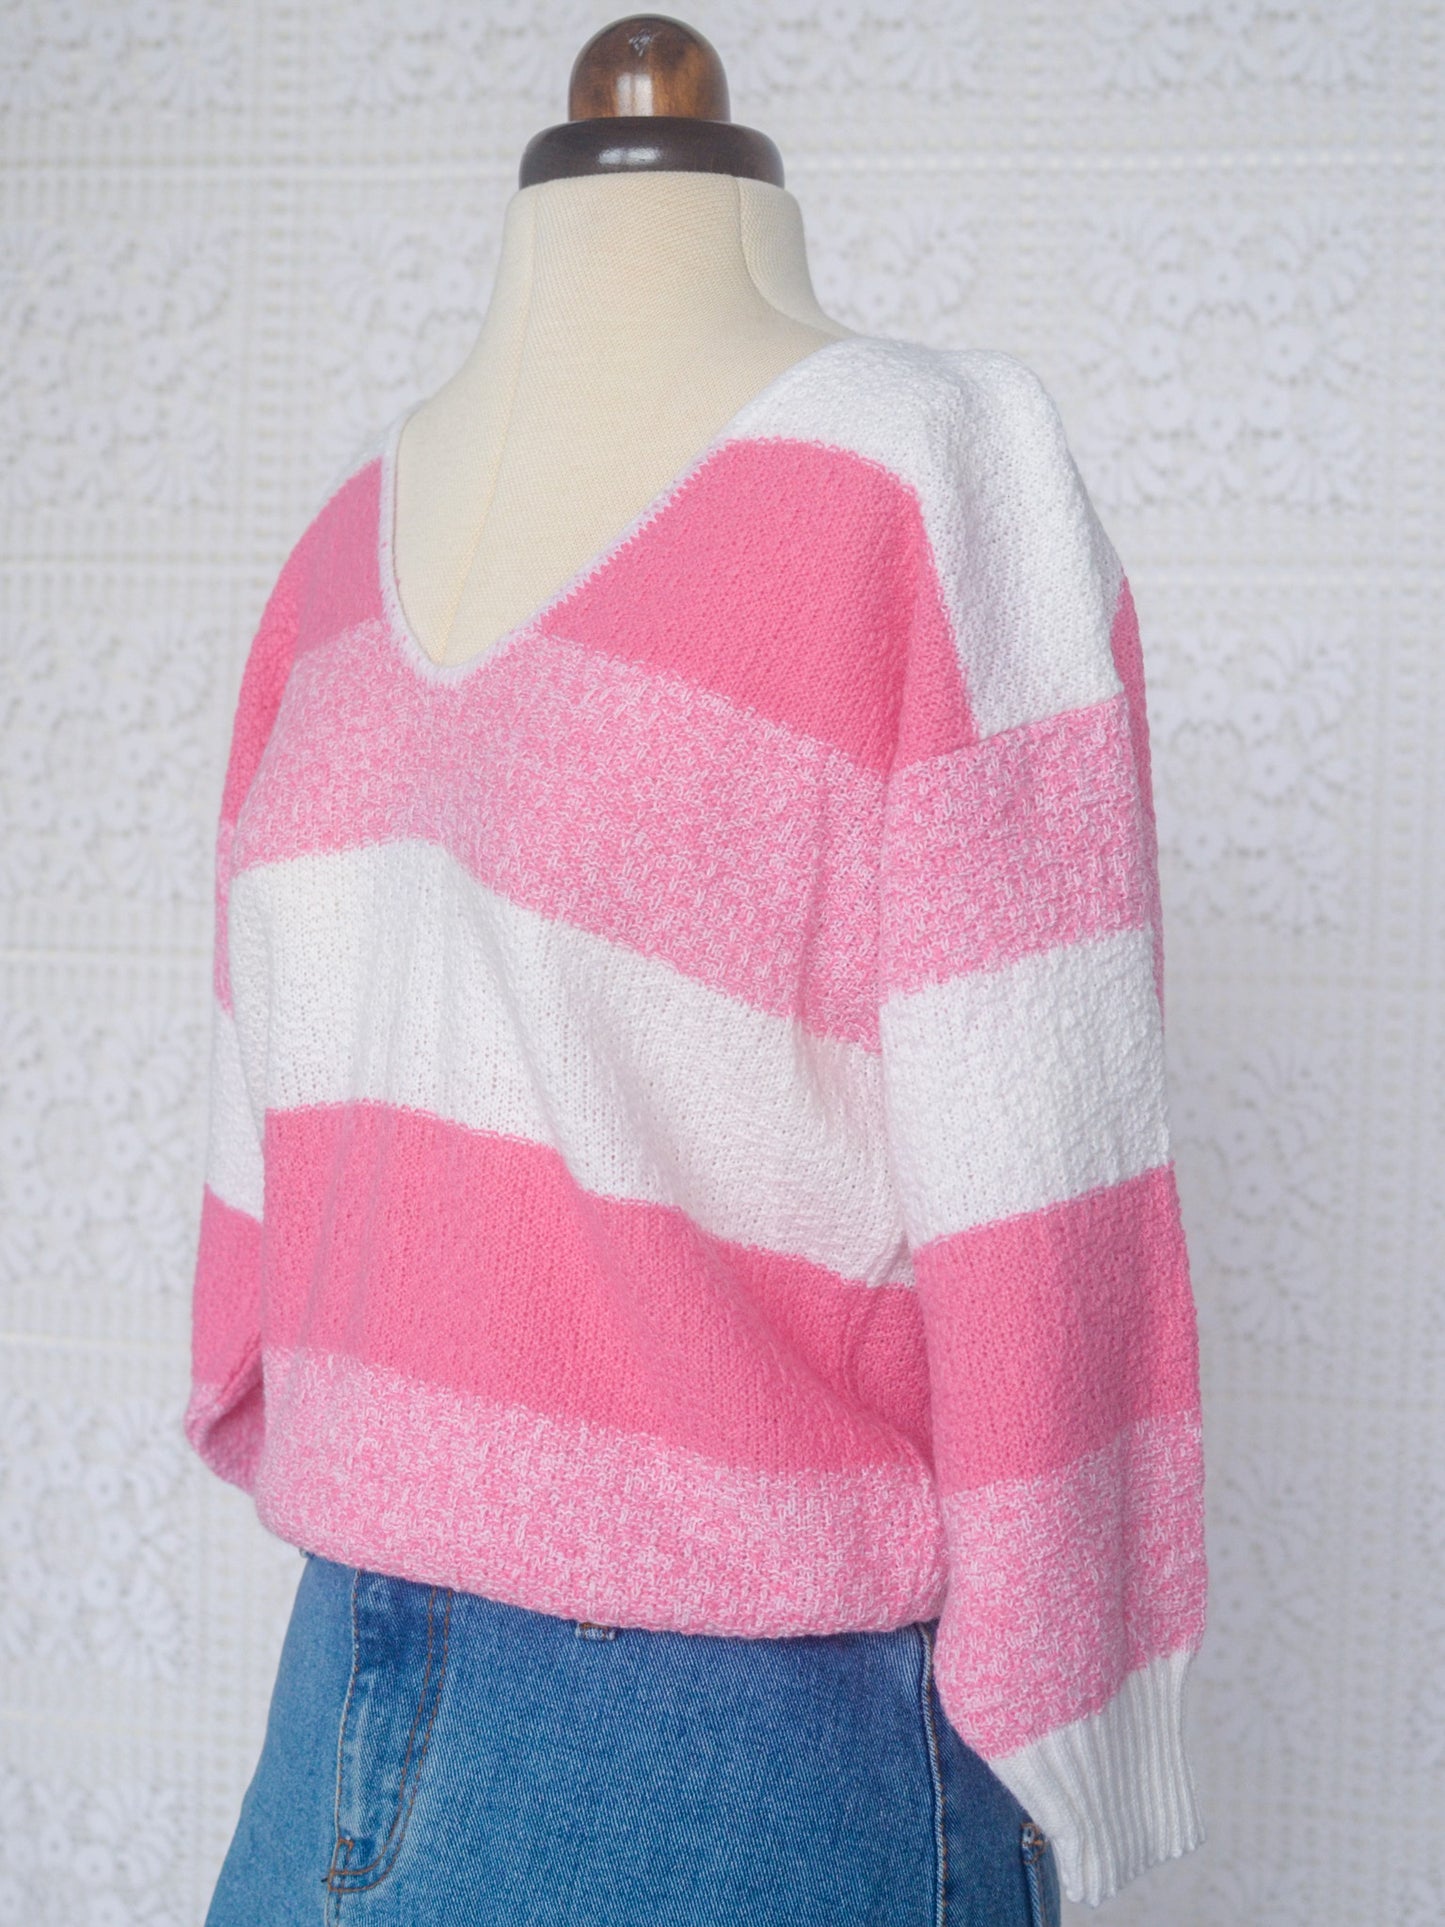 1980s style pink and white stripe v-neck jumper